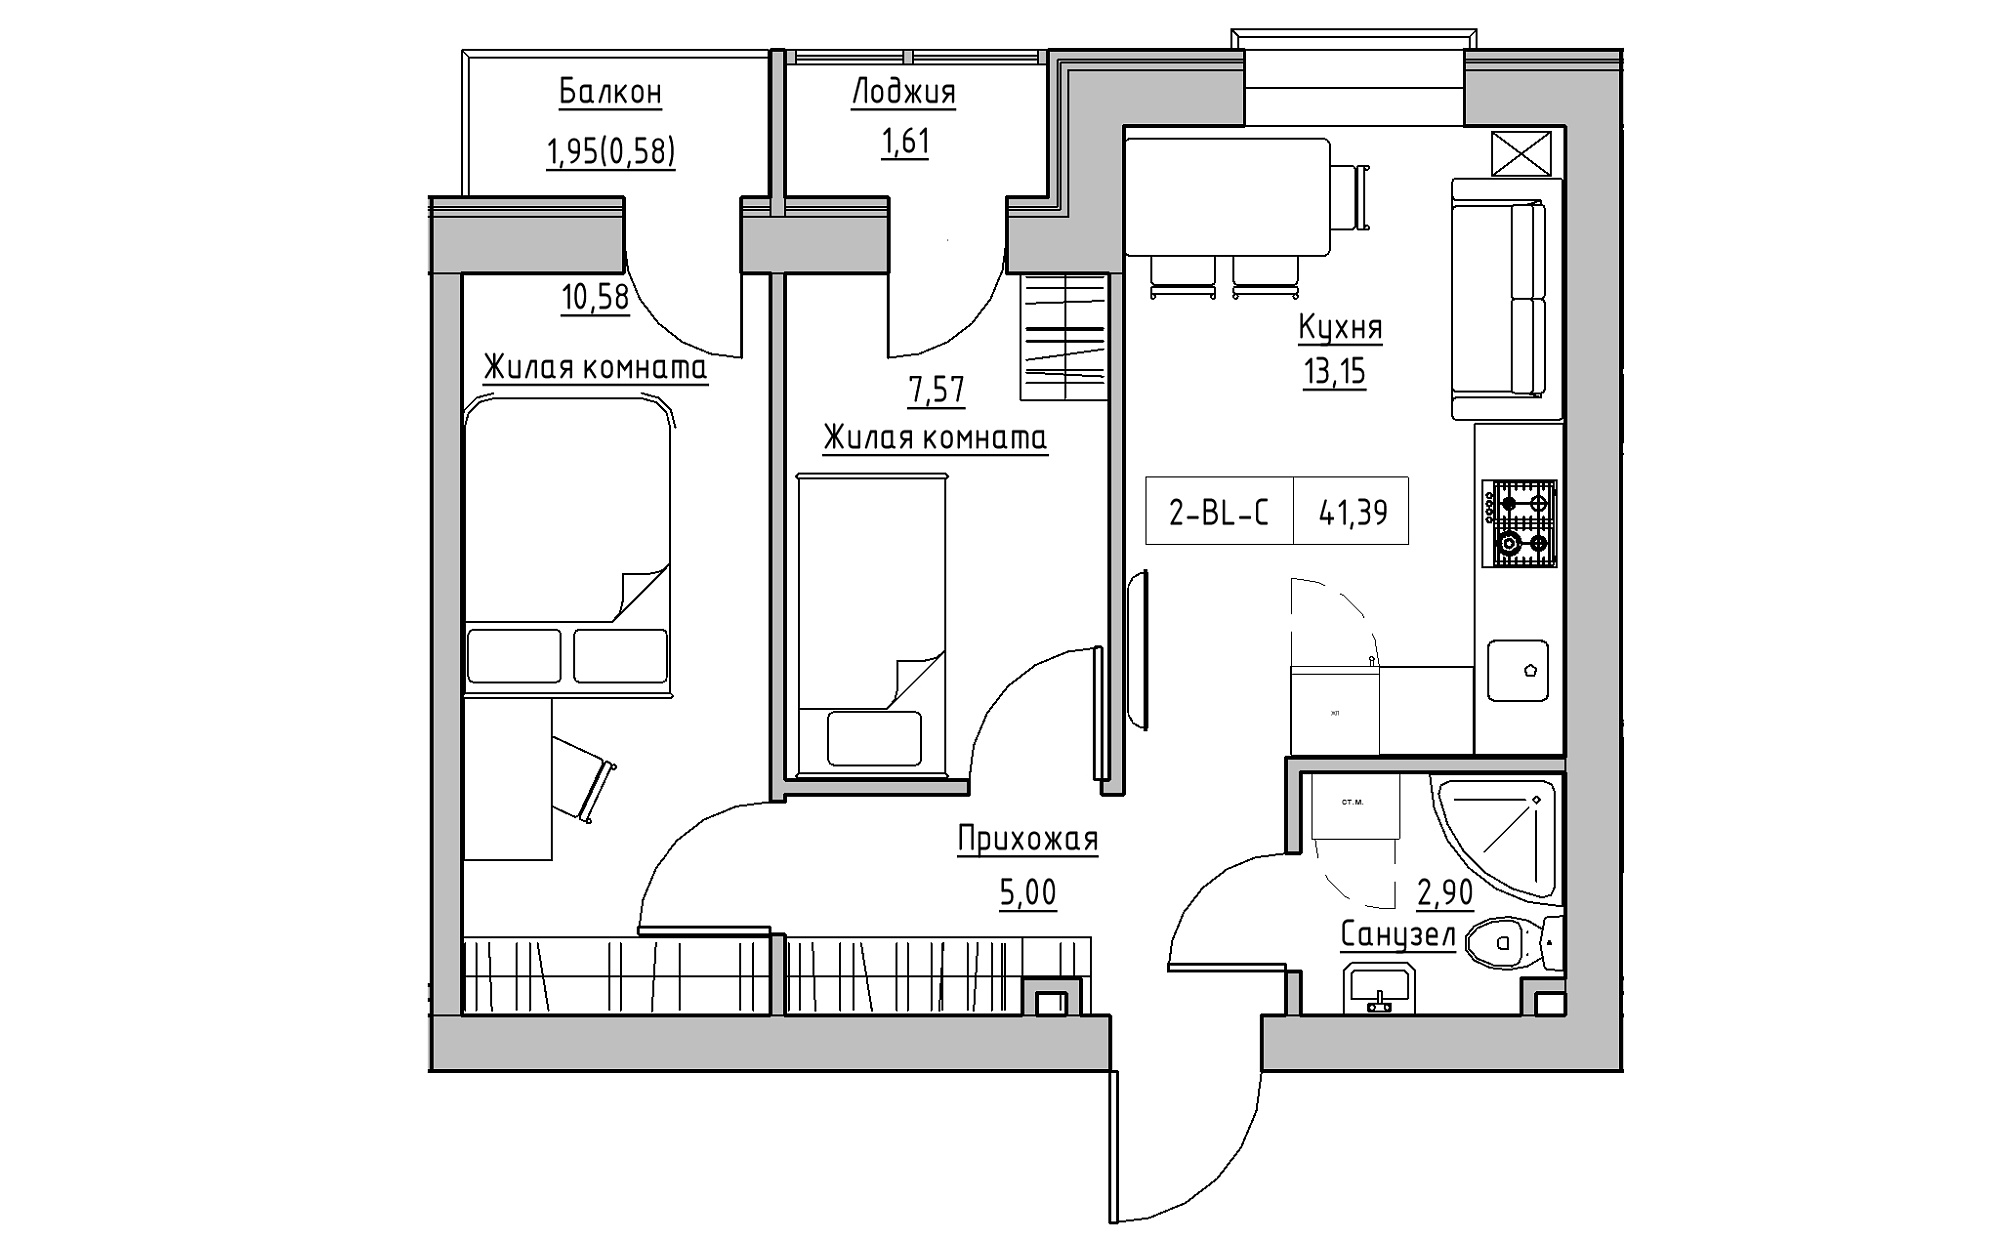 Planning 2-rm flats area 41.39m2, KS-022-04/0005.